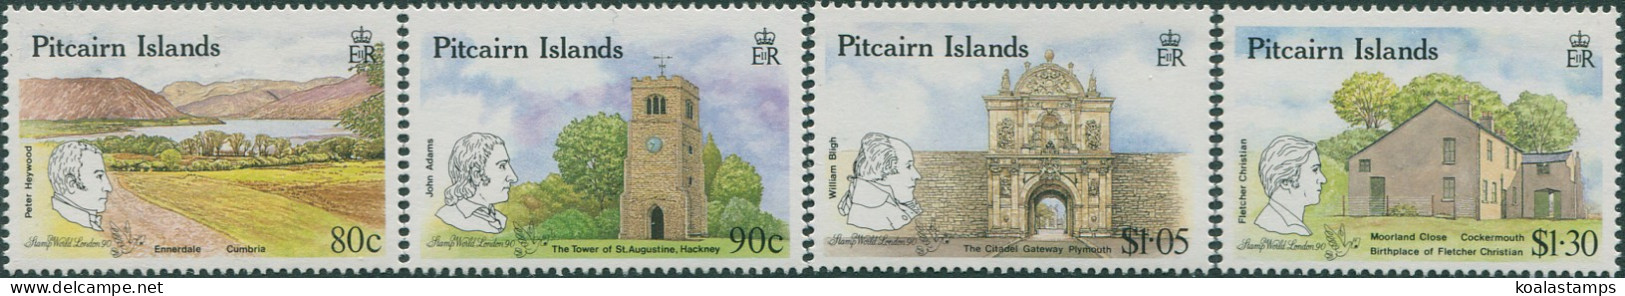 Pitcairn Islands 1990 SG362-365 Links With UK Set MNH - Pitcairn